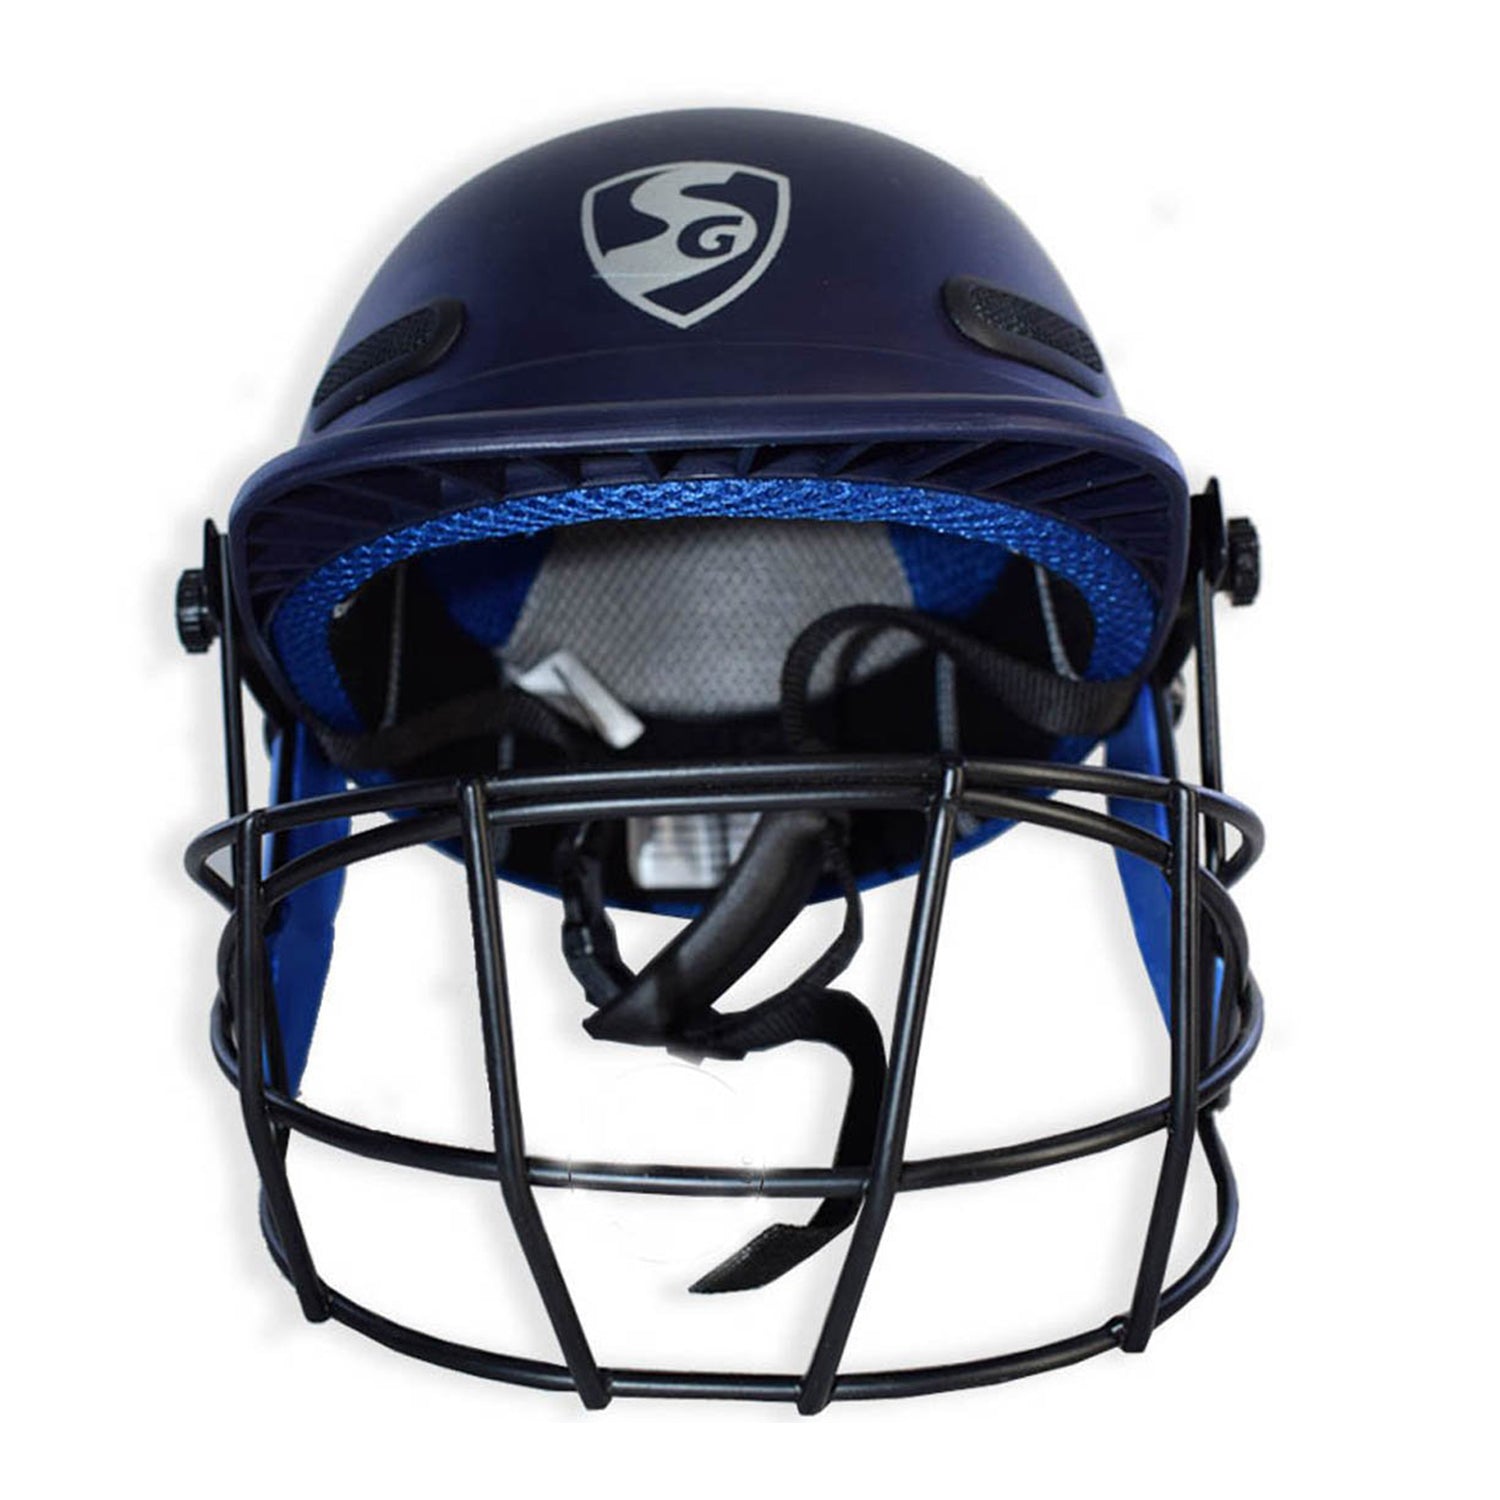 SG Aero Shield 2 Cricket Helmet - Best Price online Prokicksports.com